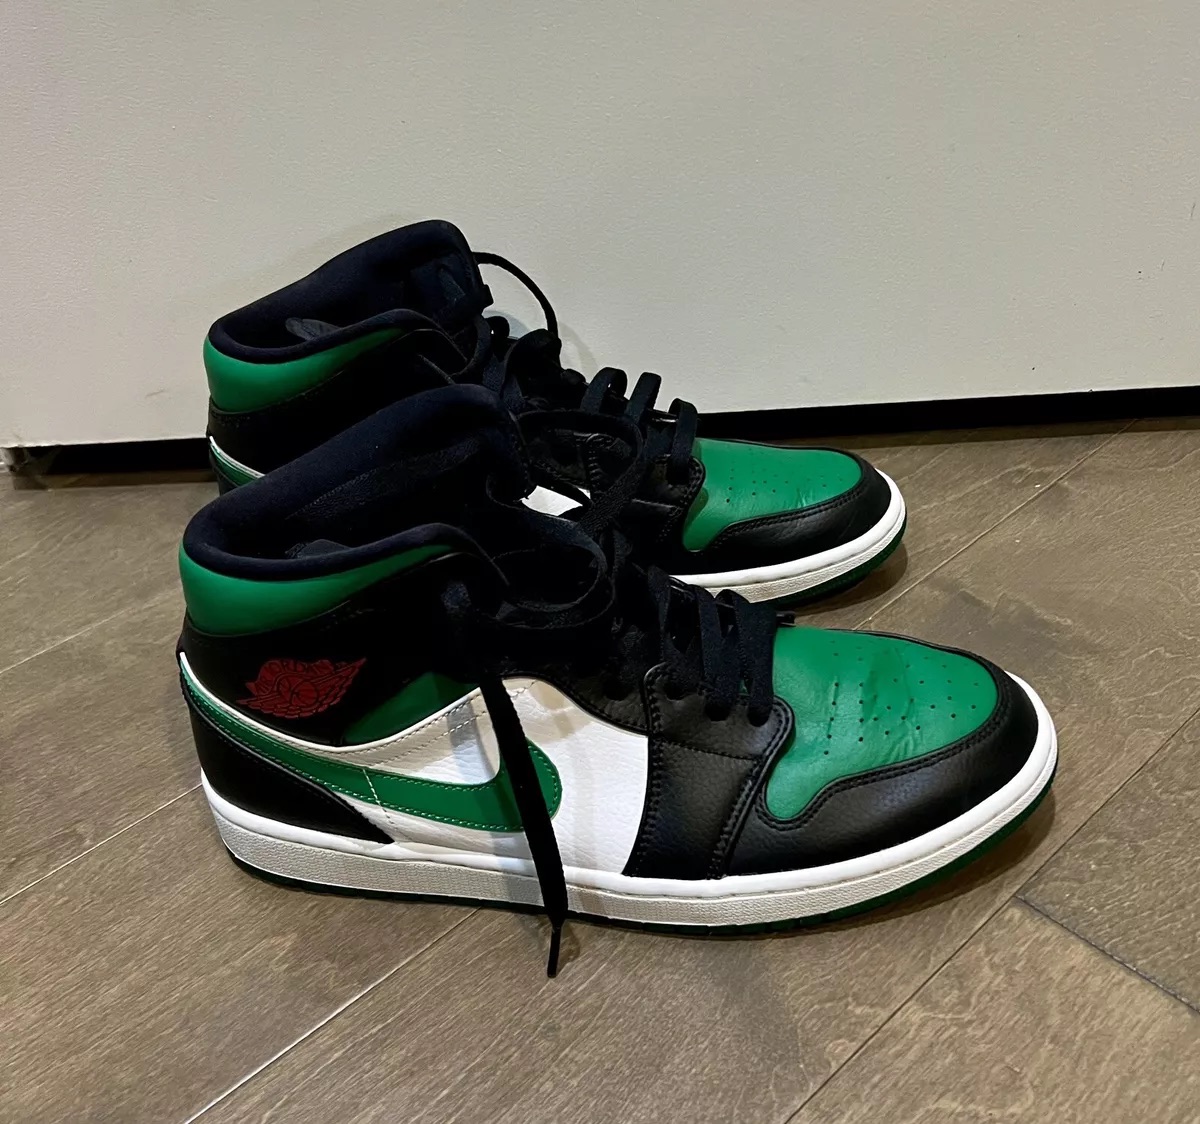 Jordan 1 mid Green Toe Size 11 – $120